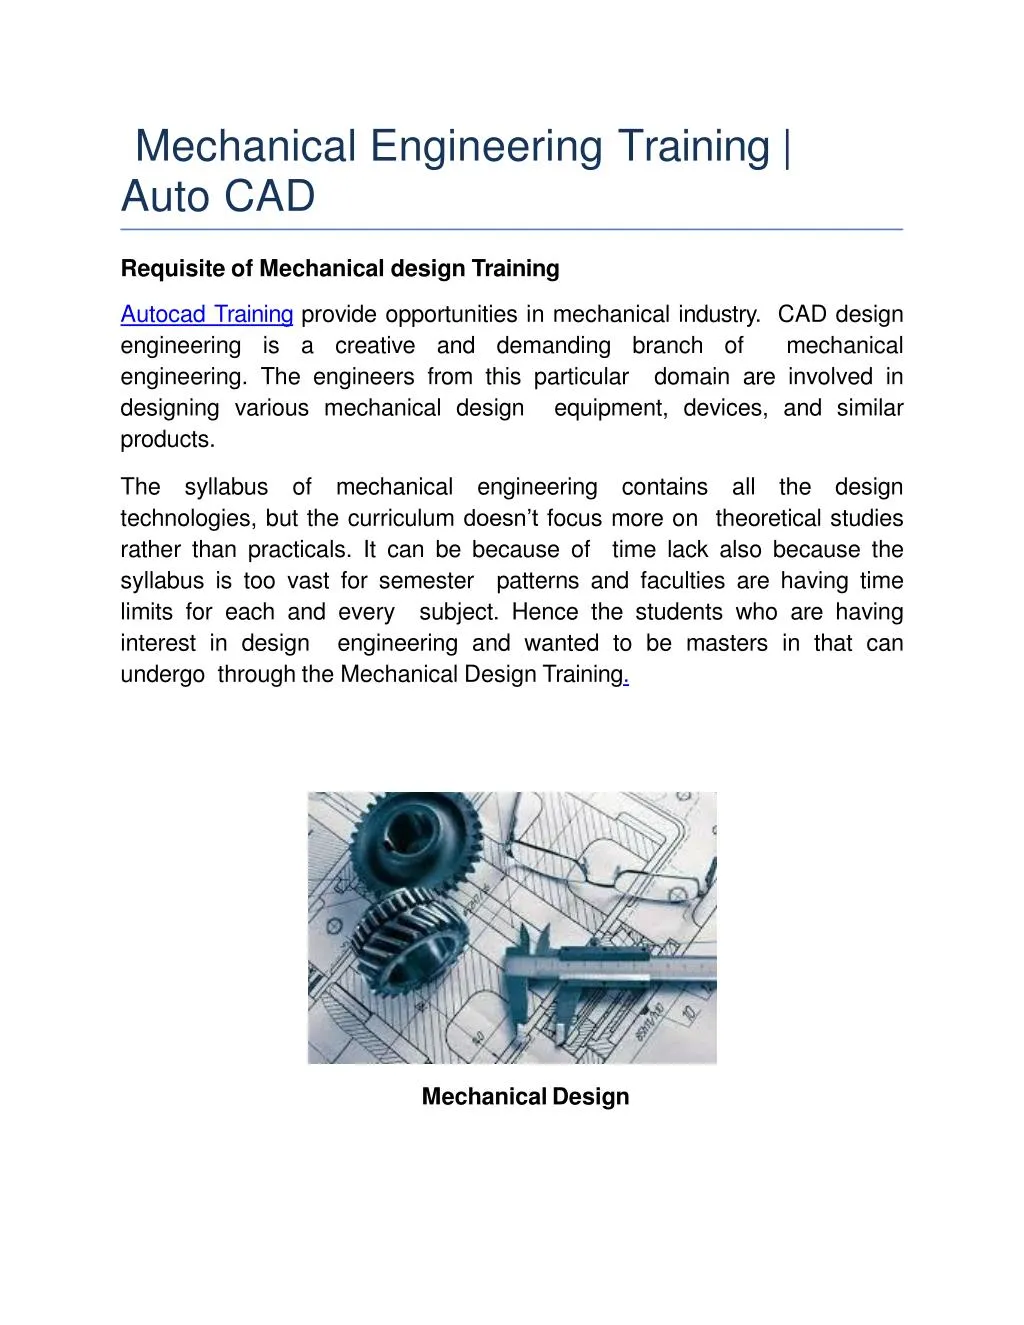 mechanical engineering training auto cad